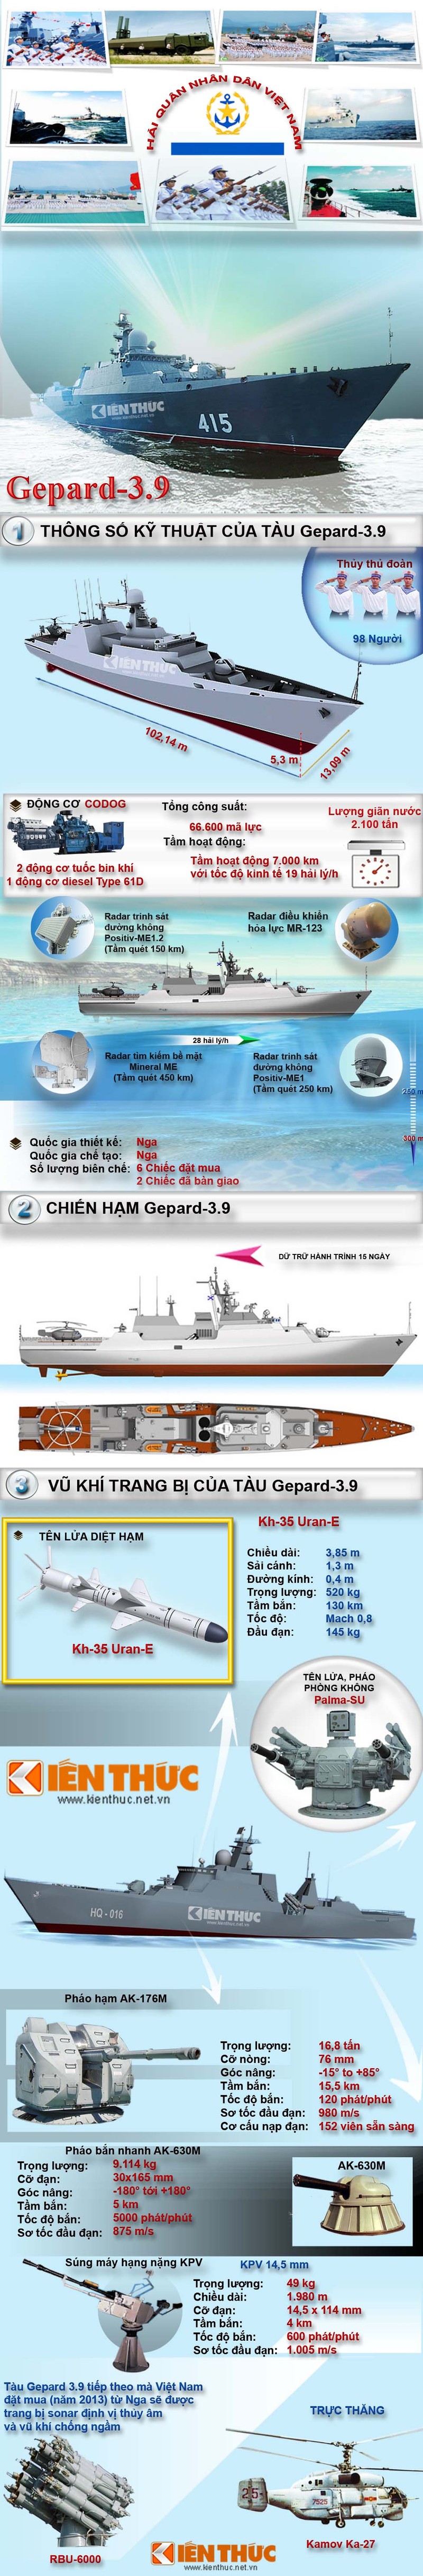 Infographic: Tau chien hien dai nhat cua Viet Nam